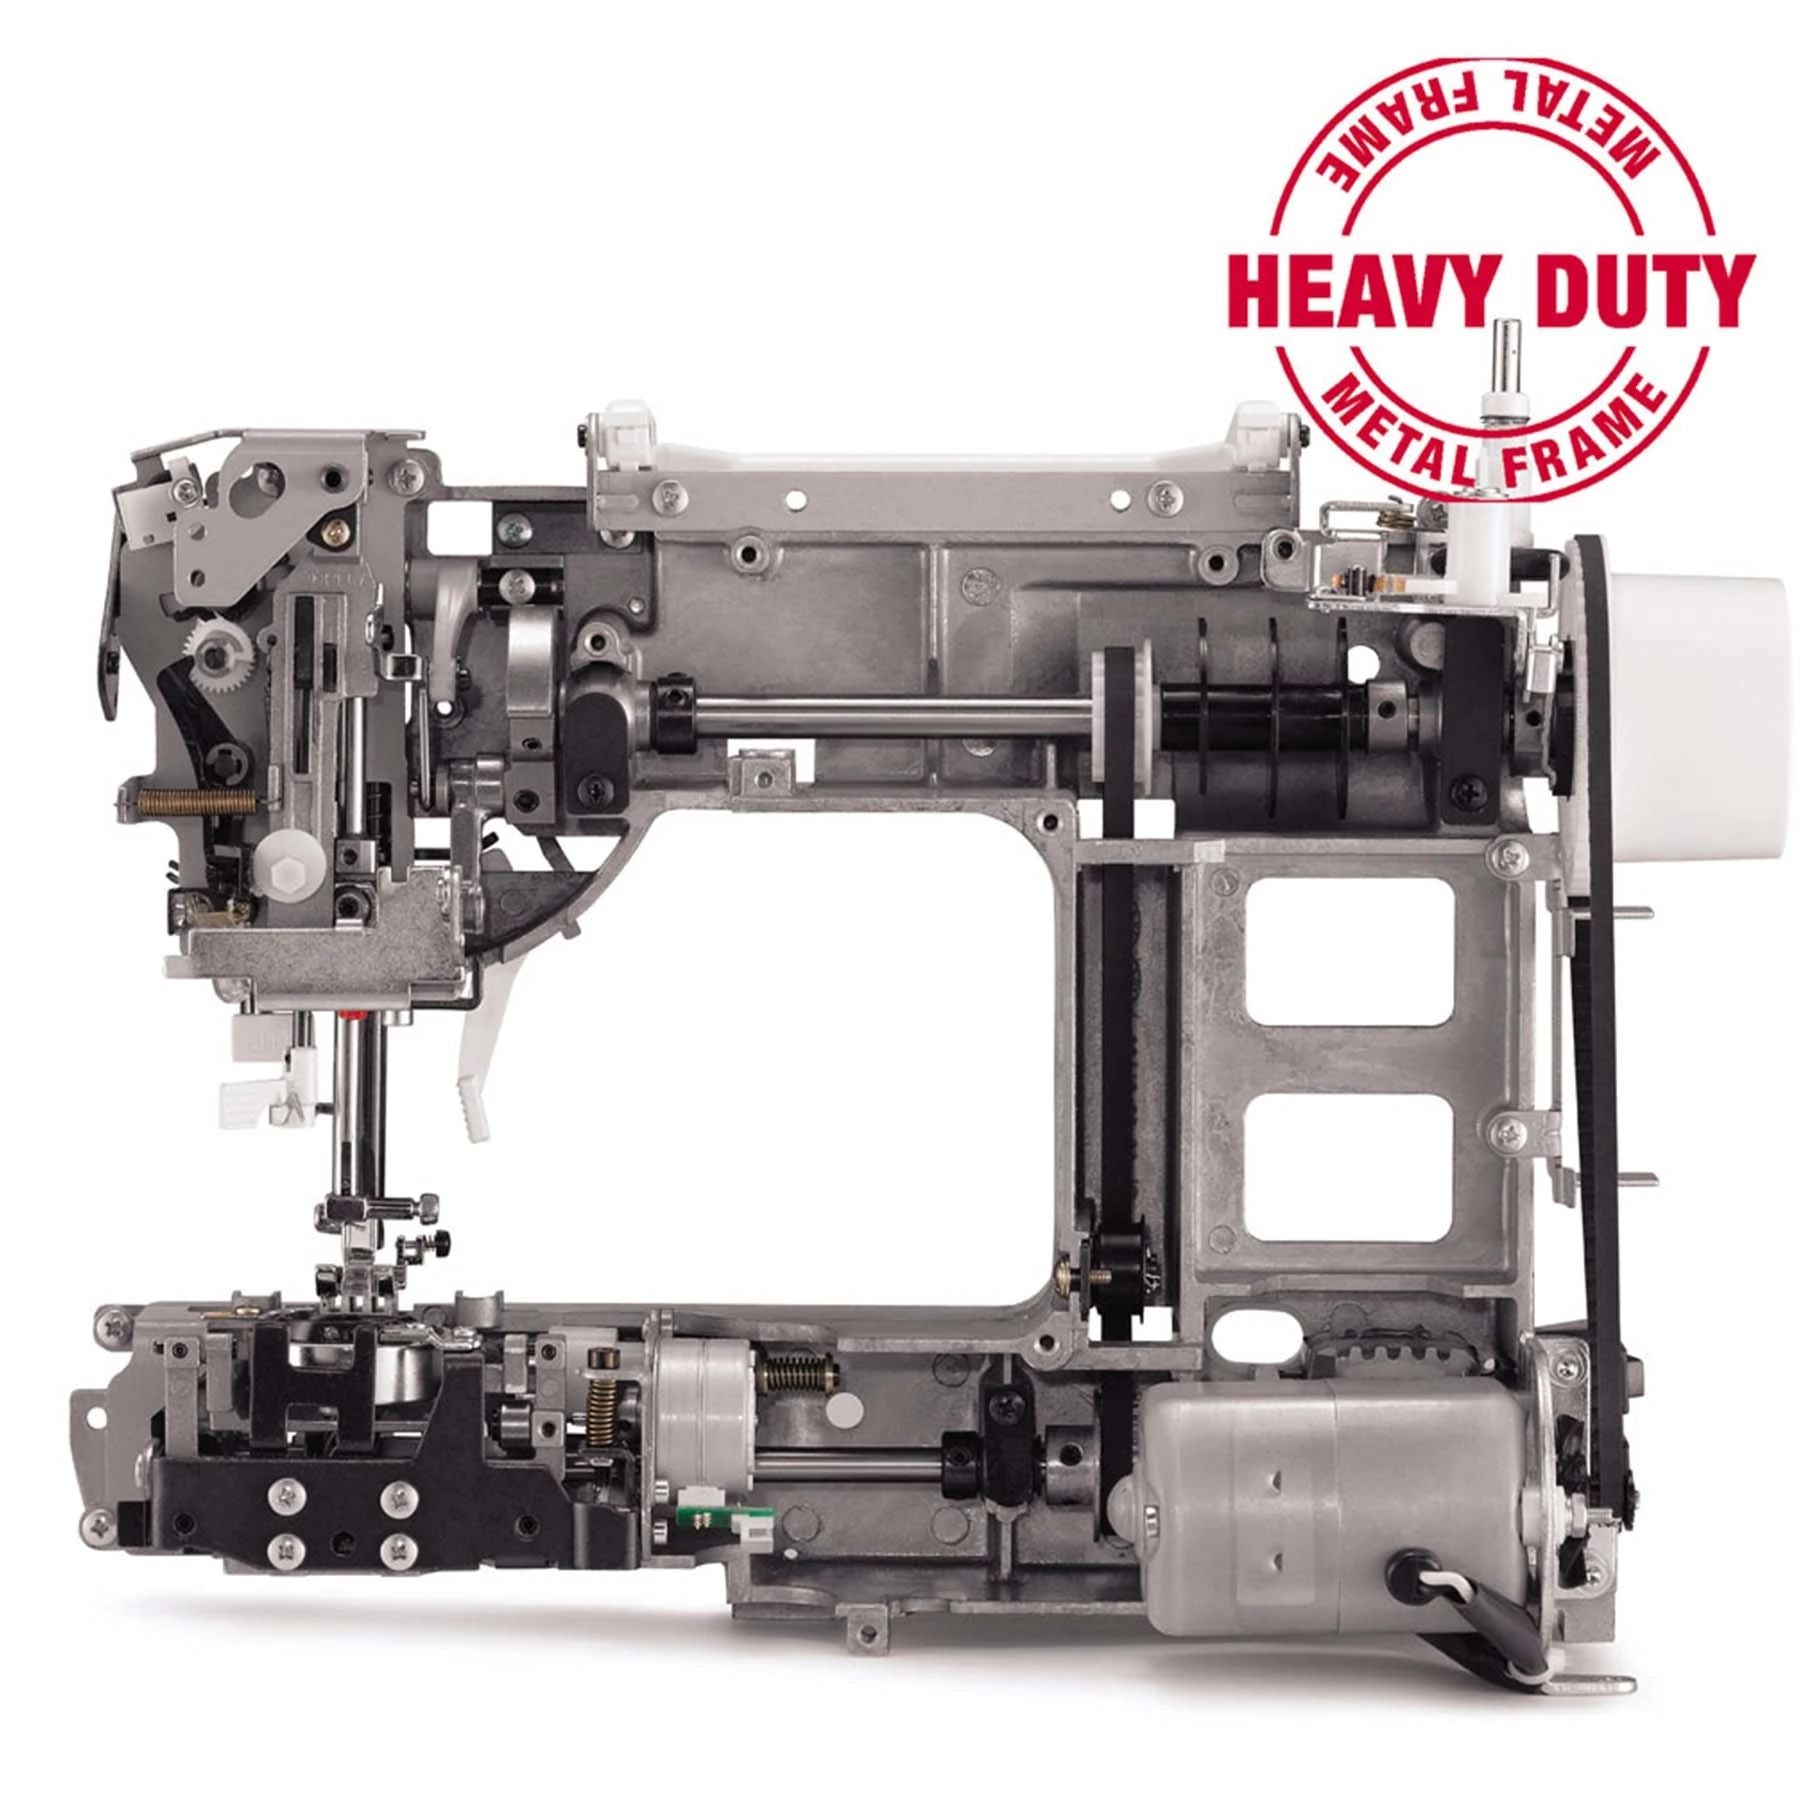 SINGER® Heavy Duty 4432 Sewing Machine